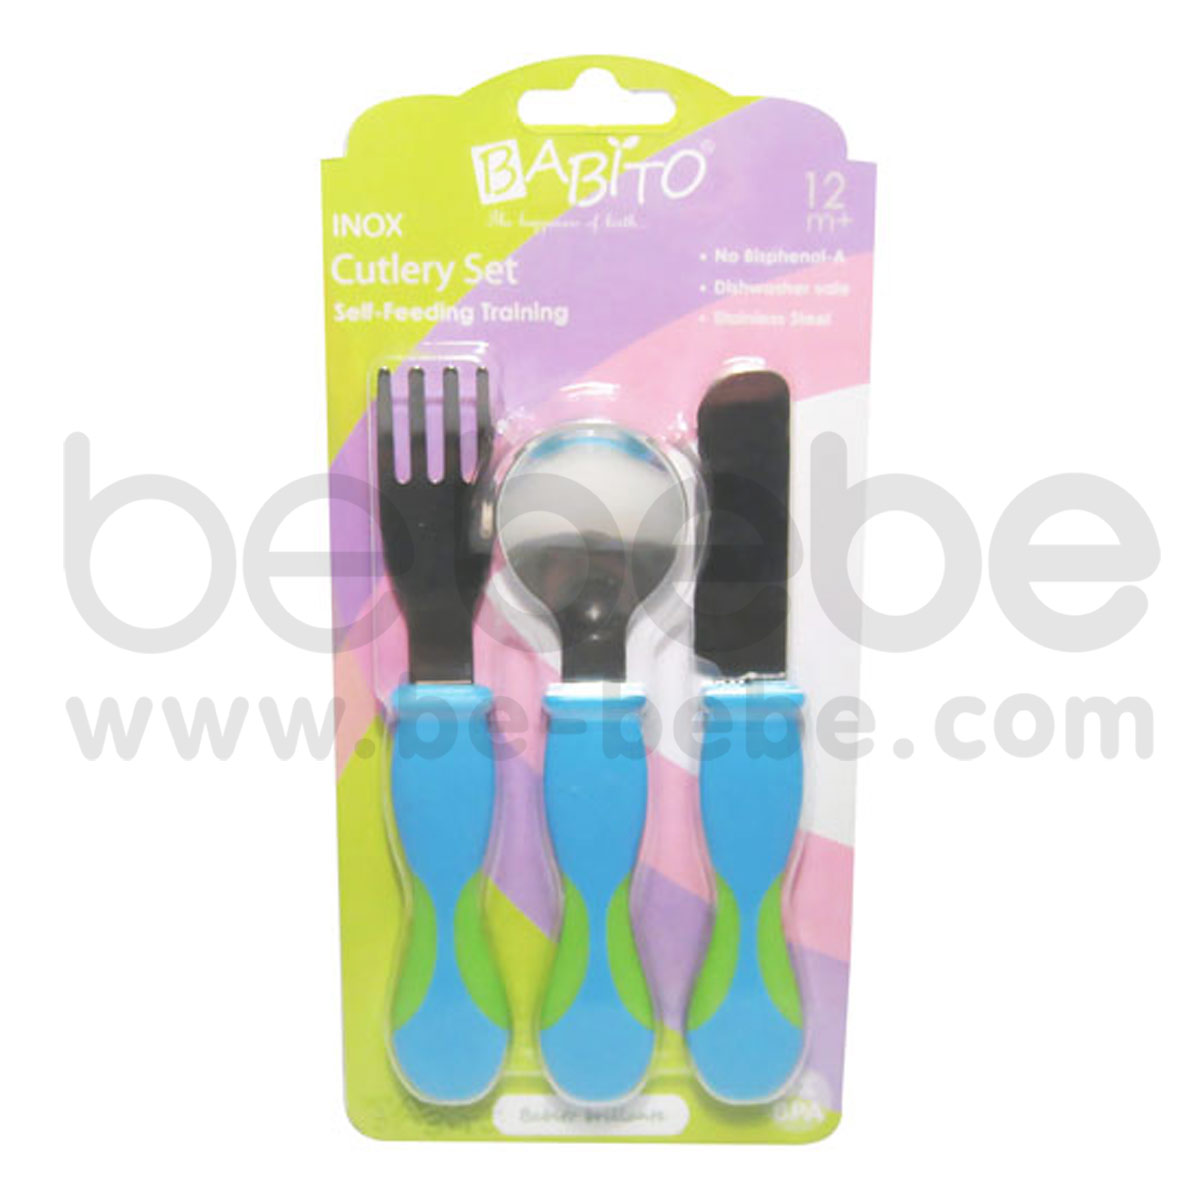 BABITO :  IINOX Self-Feeding Training Cutlery Set / Blue